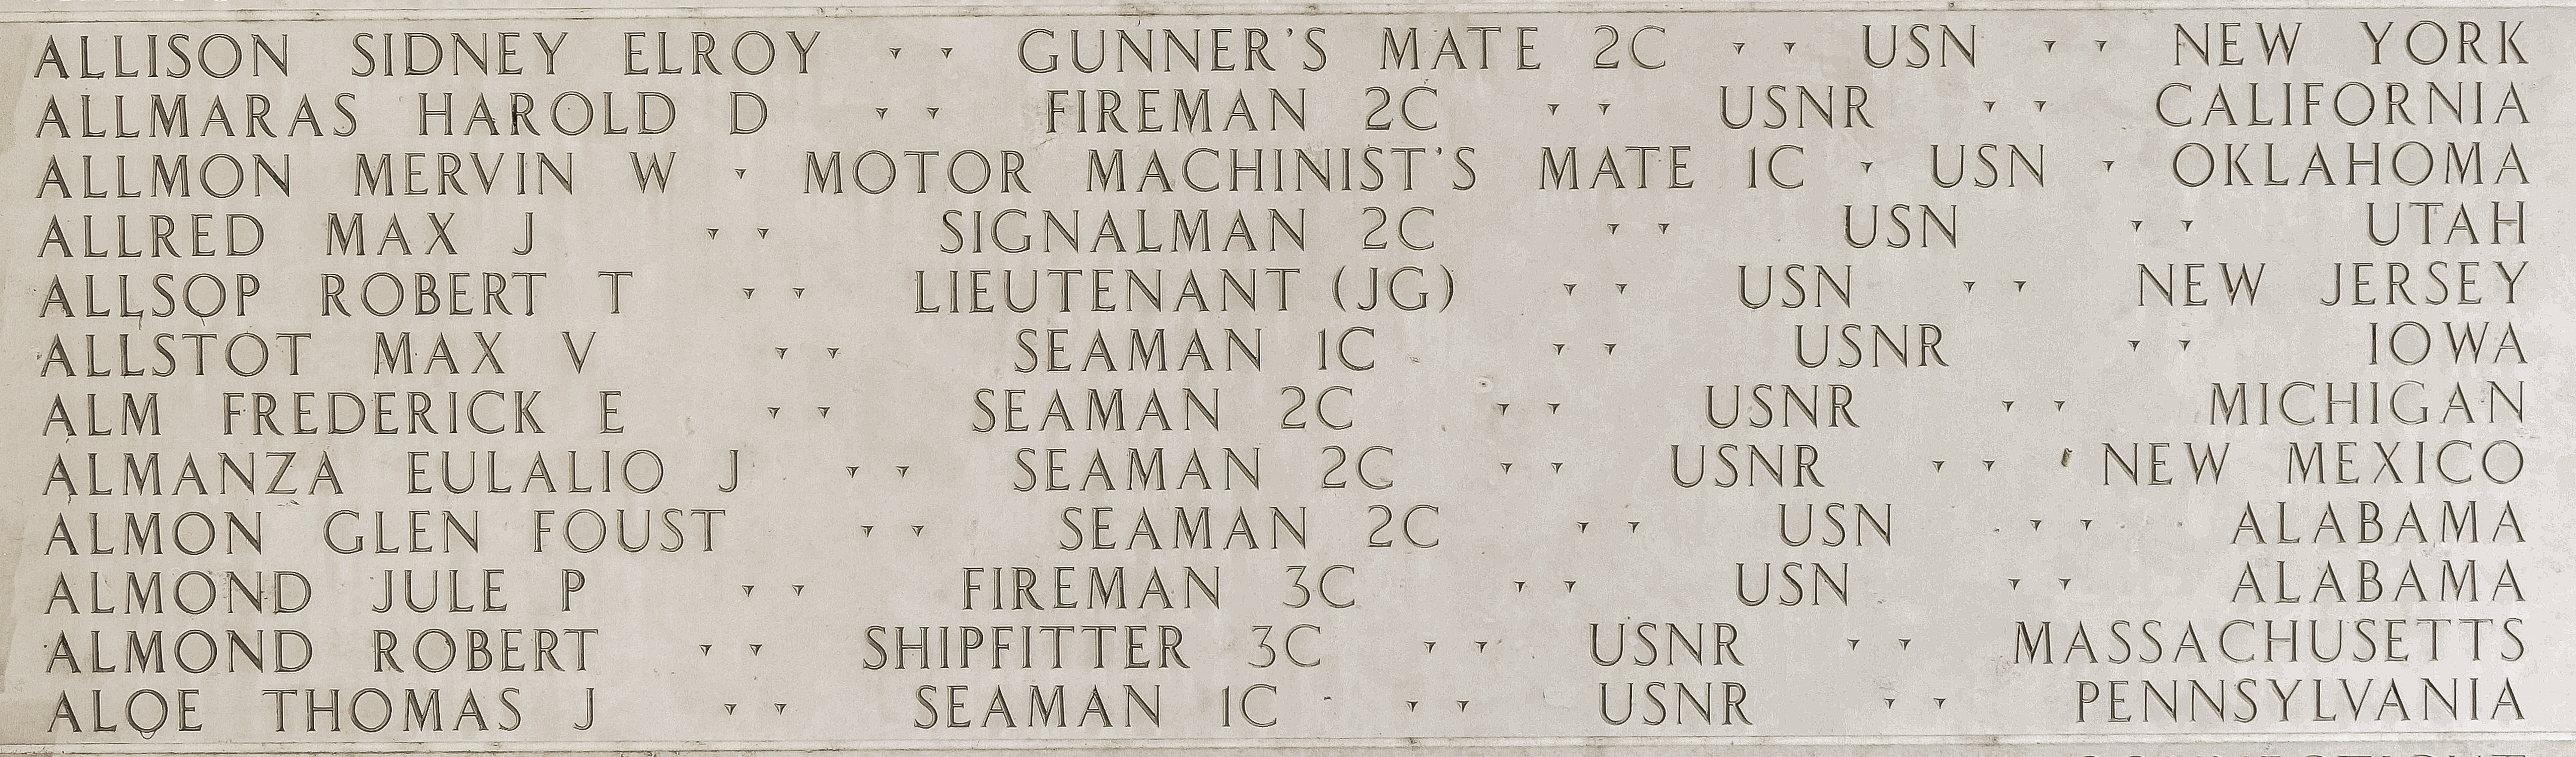 Max J. Allred, Signalman Second Class